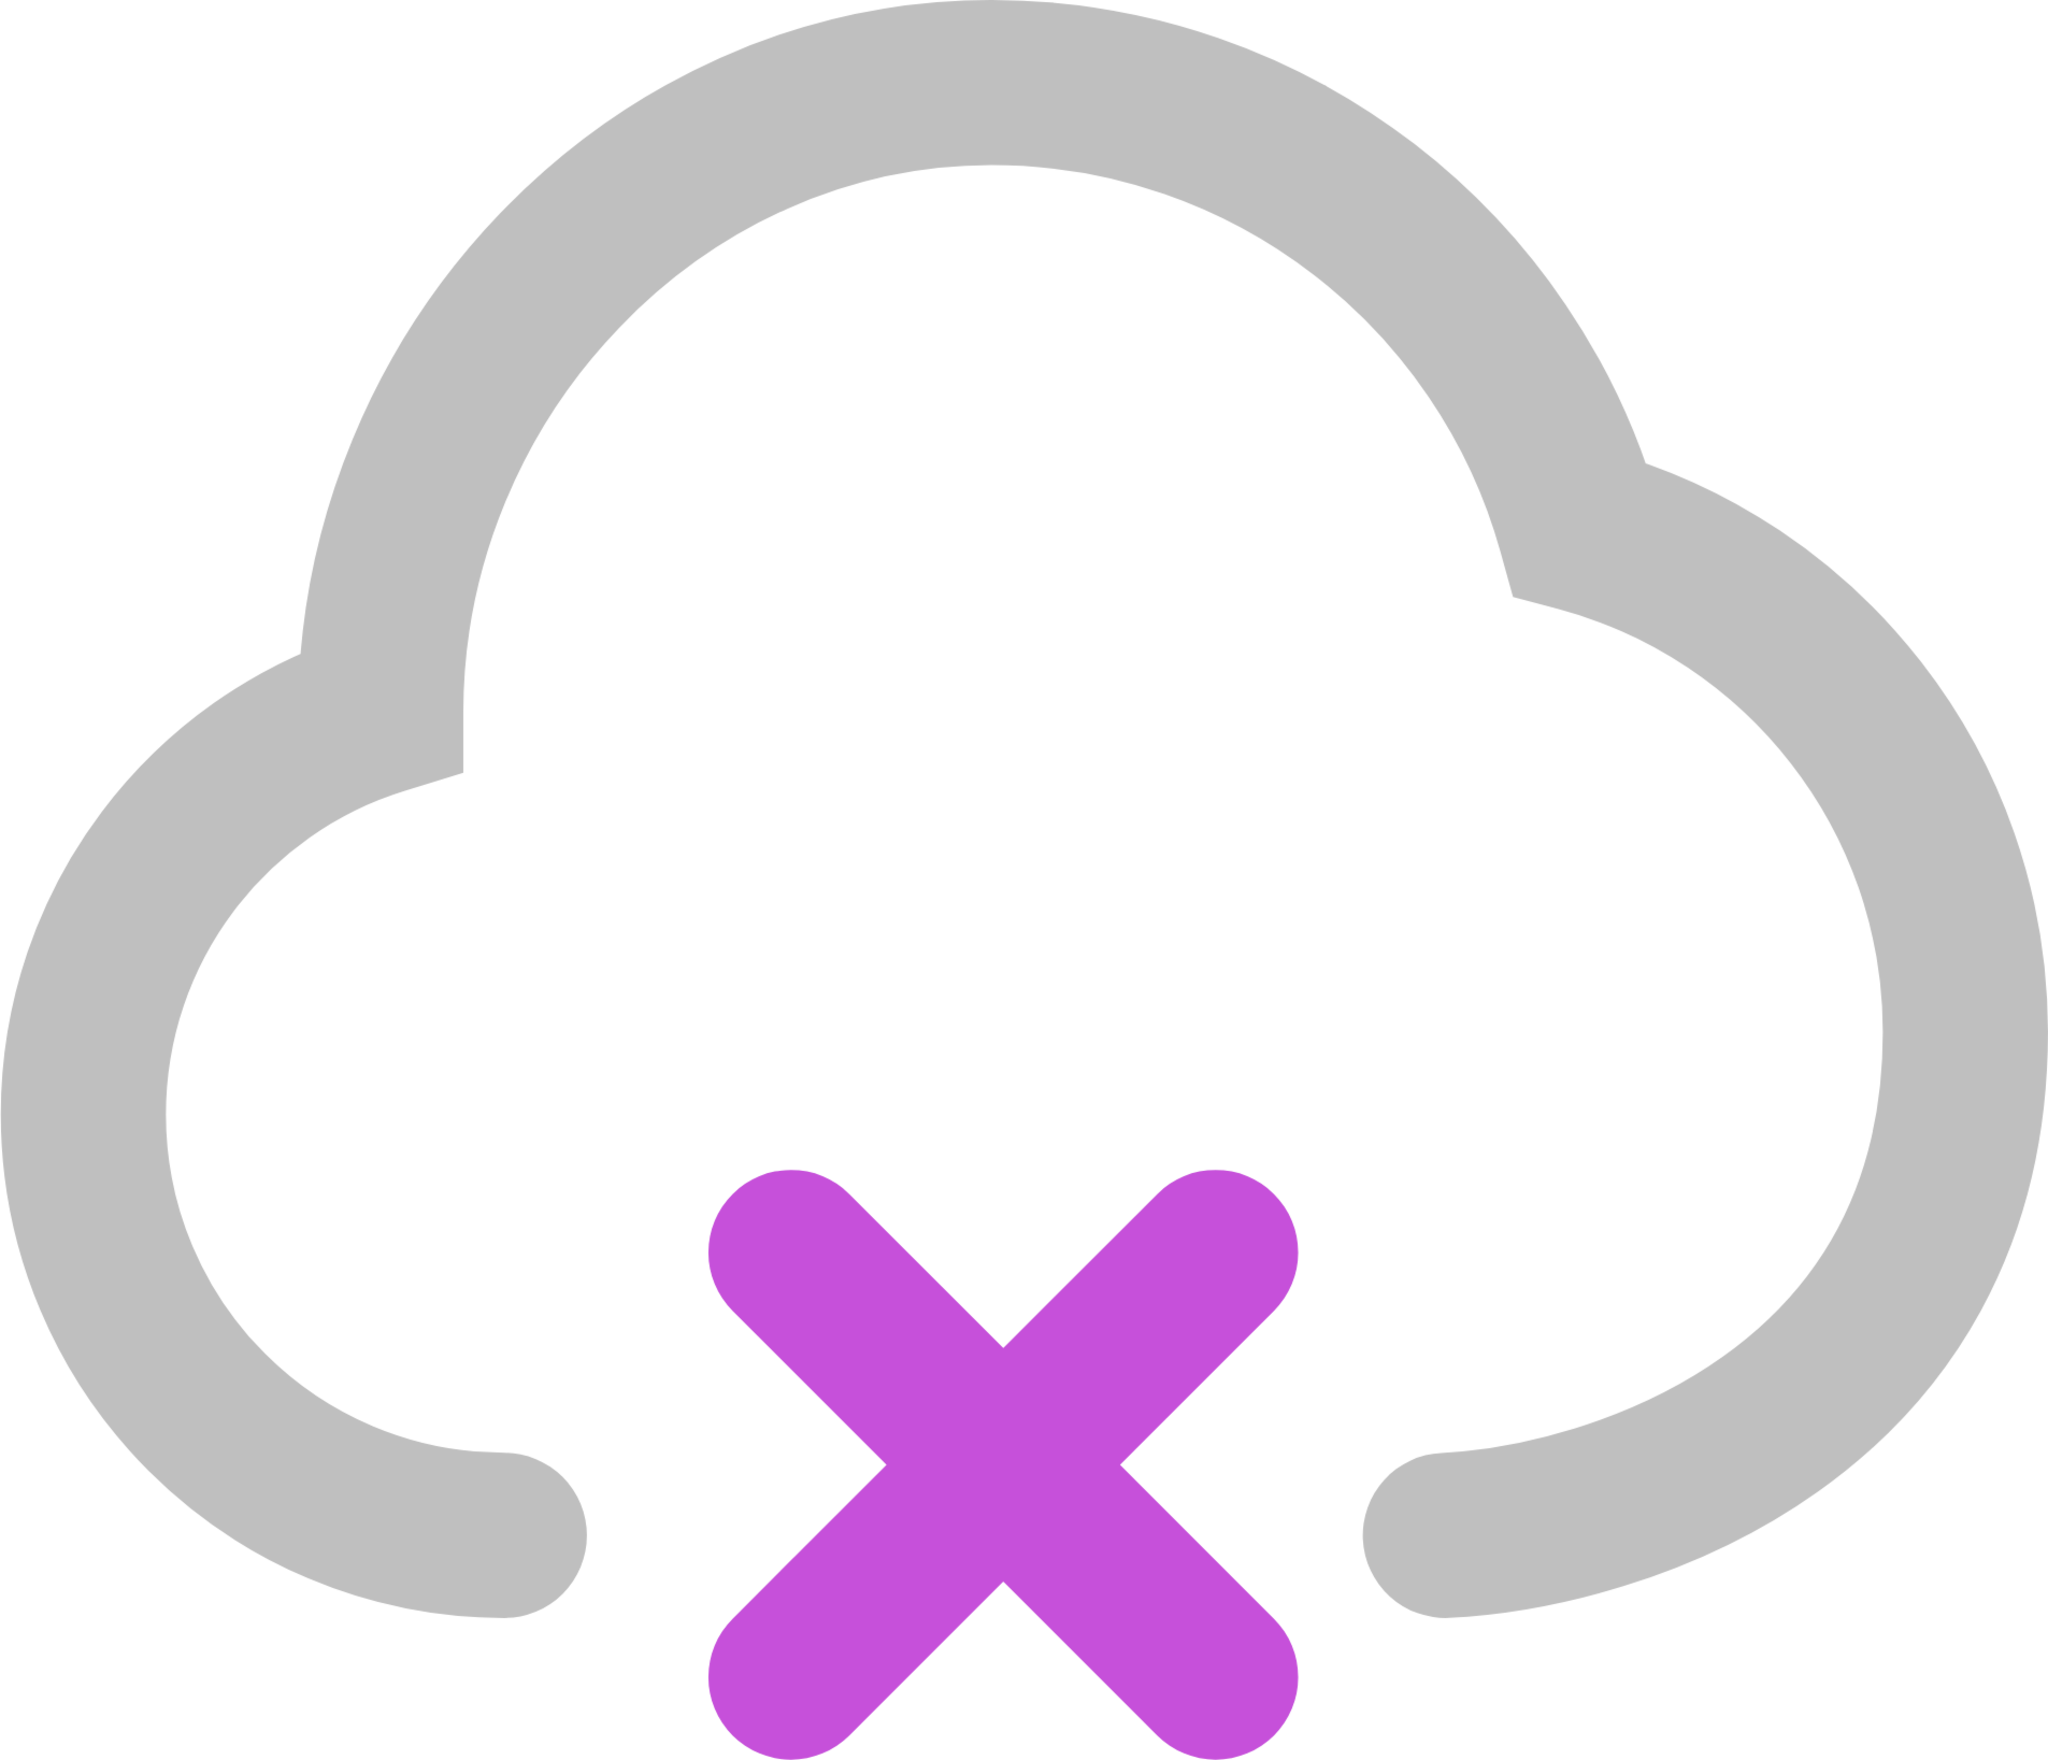 cloud 6 icon